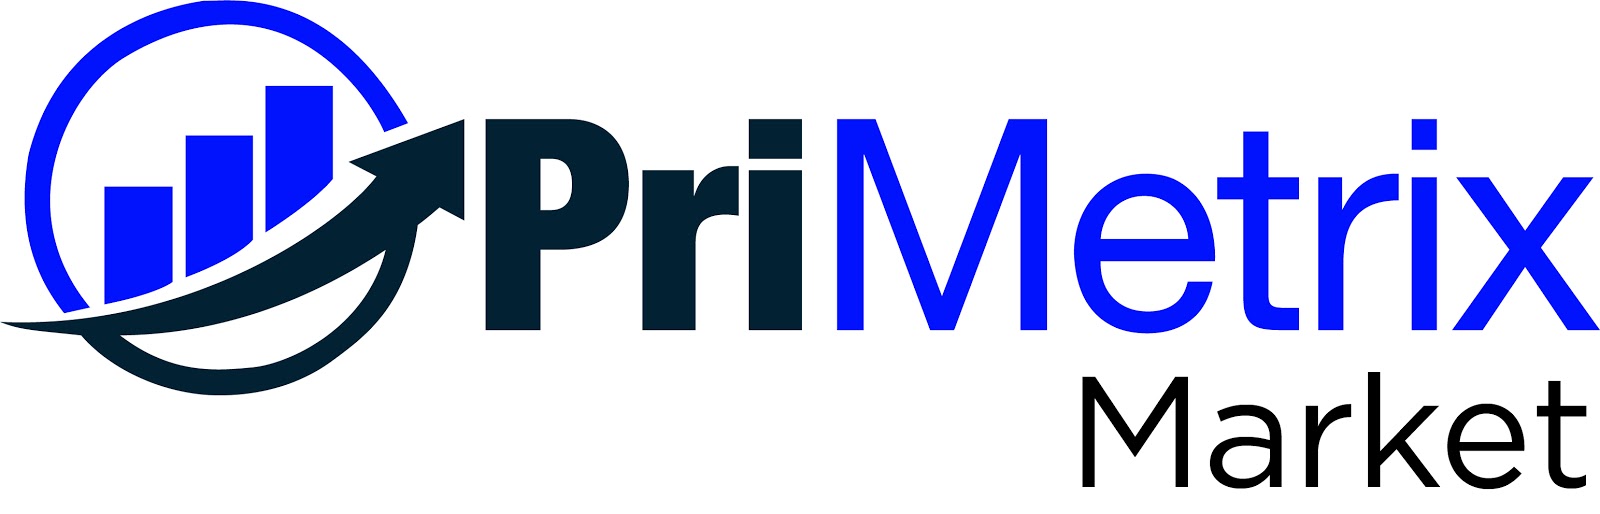 , PriMetrix Market Report Request, Nationwide Marketing Group